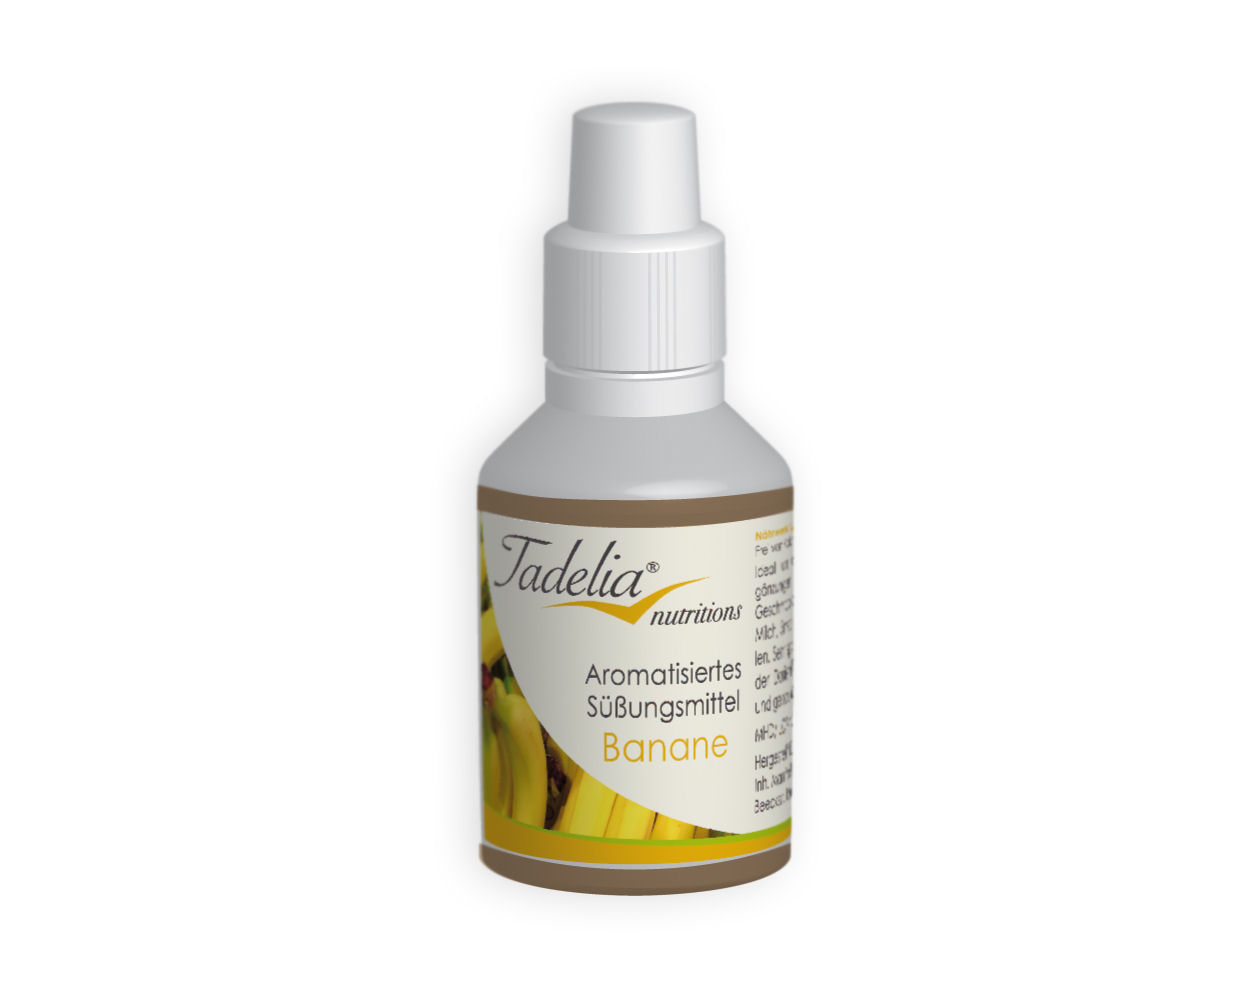 Tadelia® Aromatisiertes Süßungsmittel - Banane 30 ml